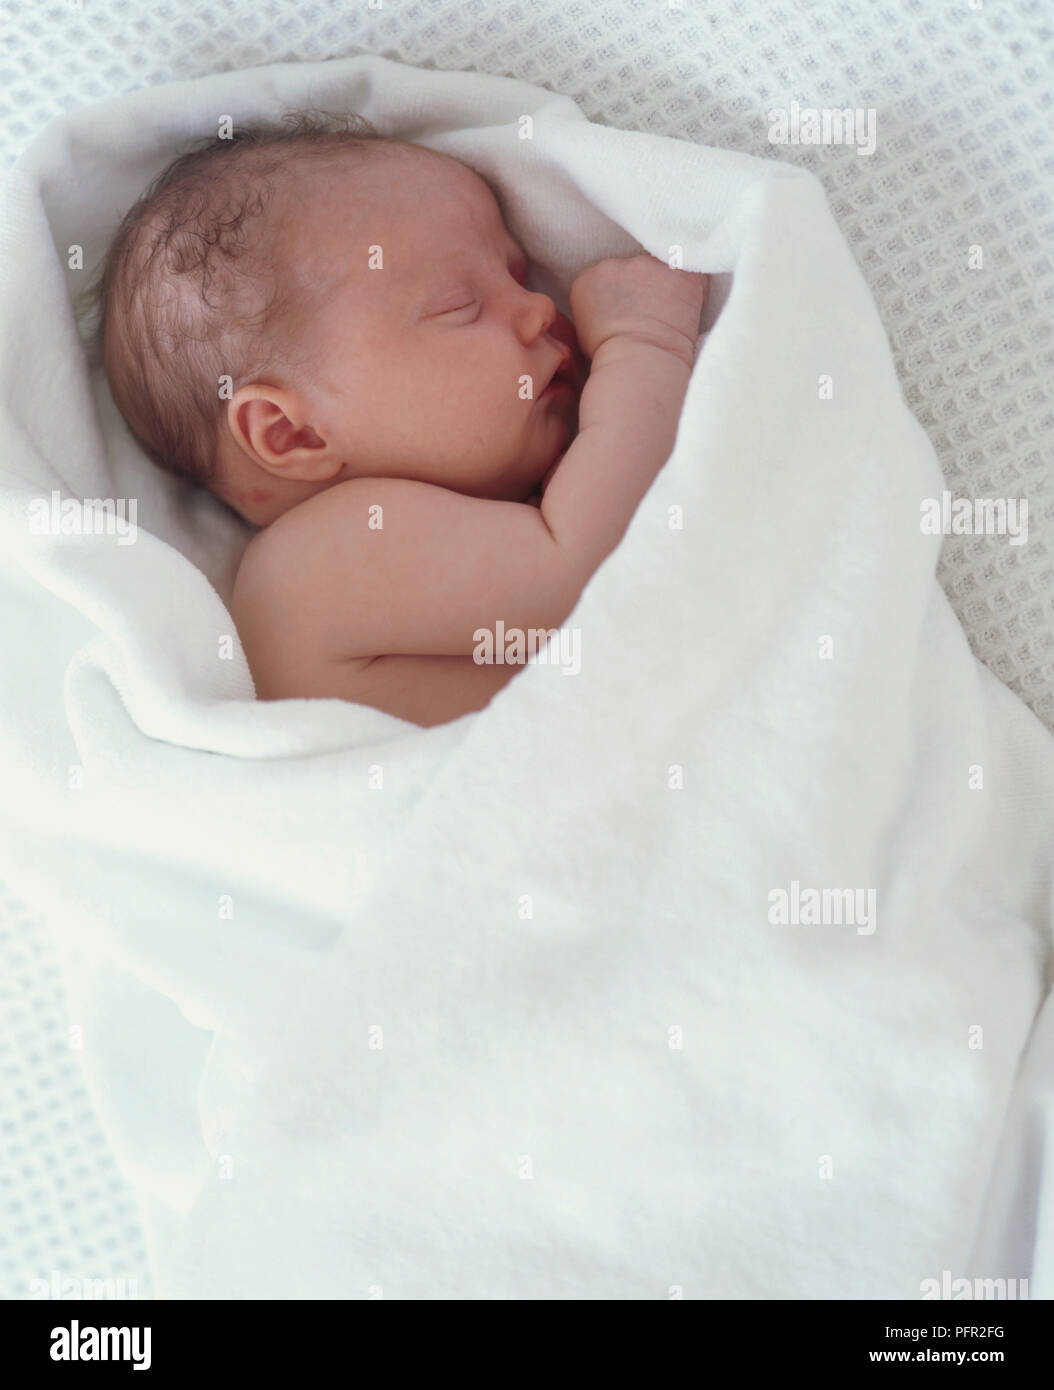 Newborn baby girl sleeping, wrapped in white blanket Stock Photo